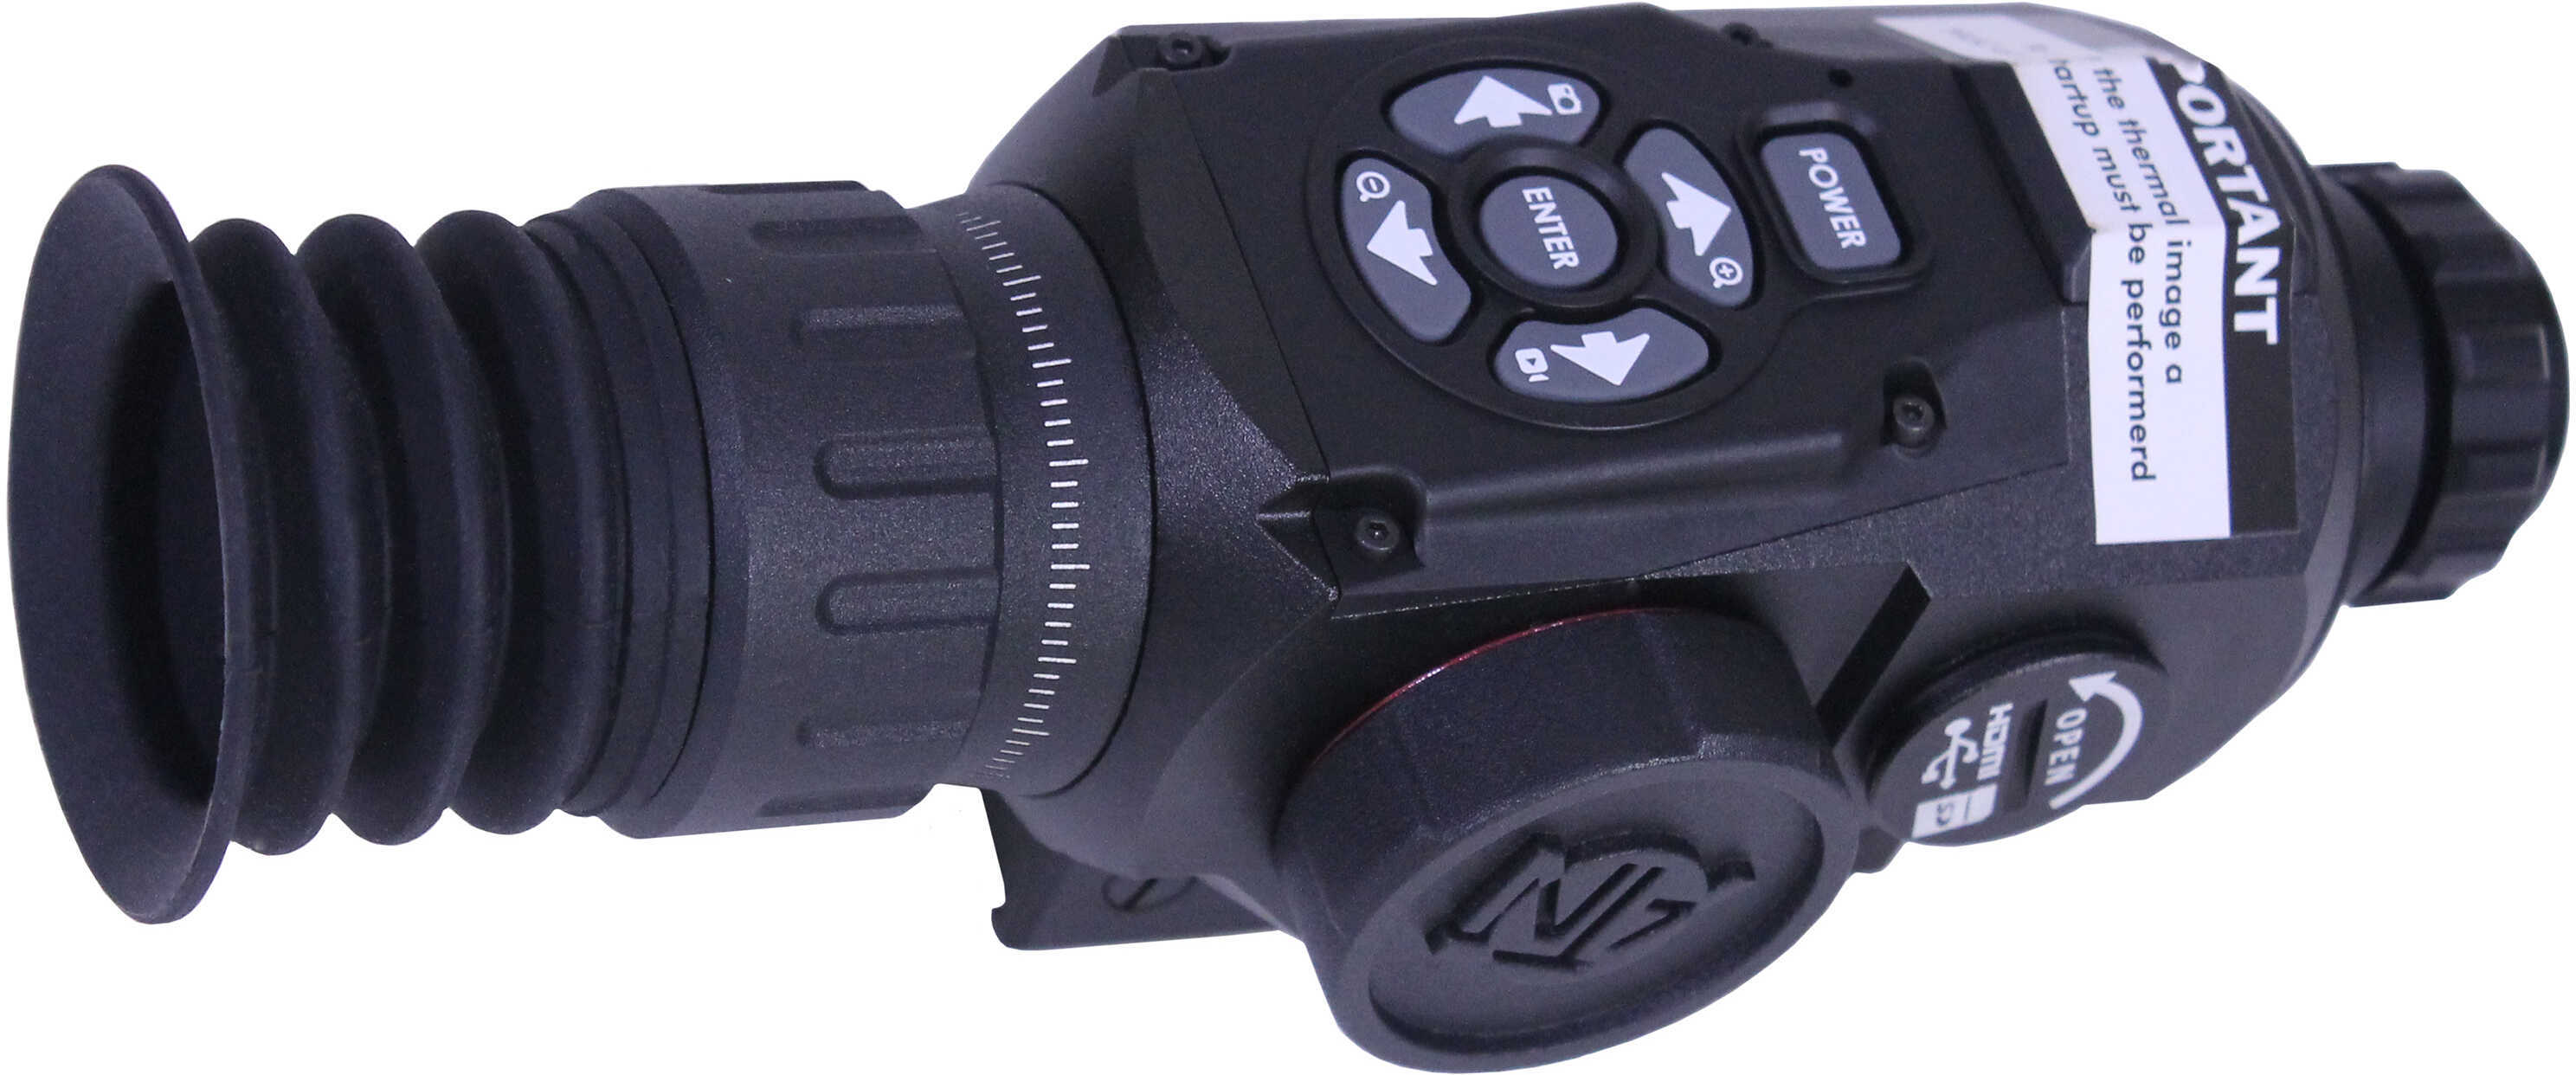 ATN Thor Smart HD 1-10 640 Thermal Riflescope